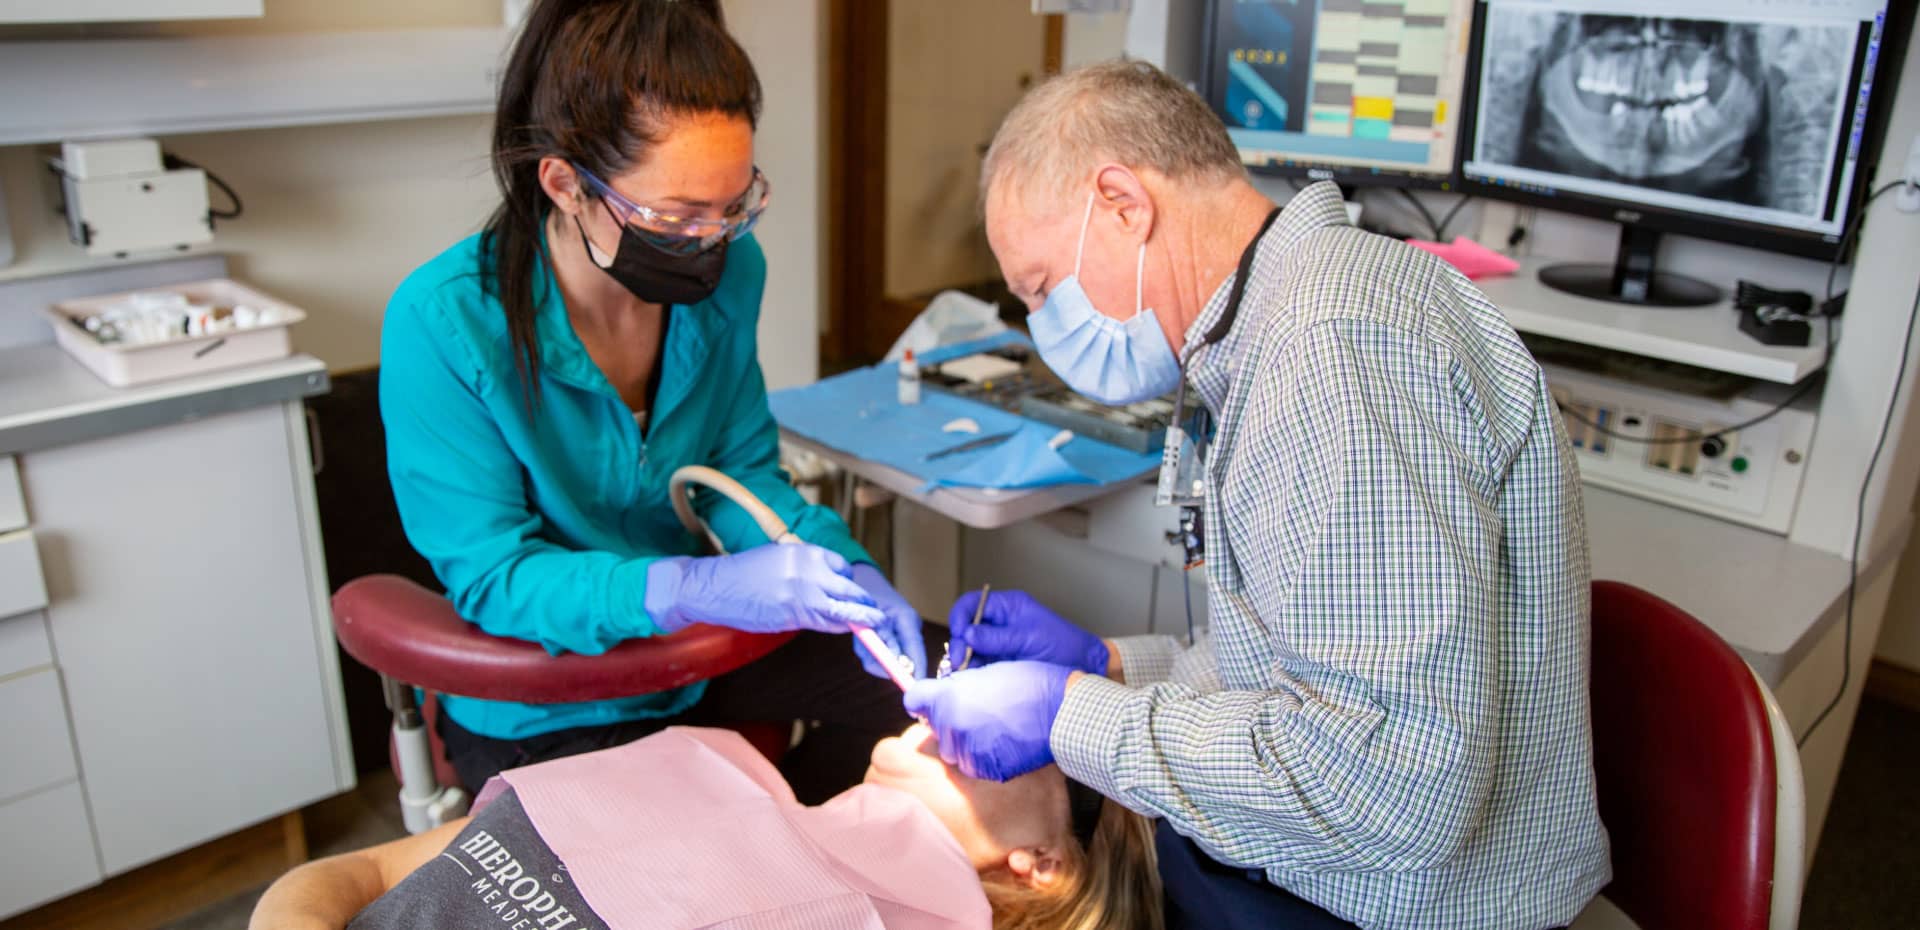 Dr. Spencer and team member performing dental procedure on patient